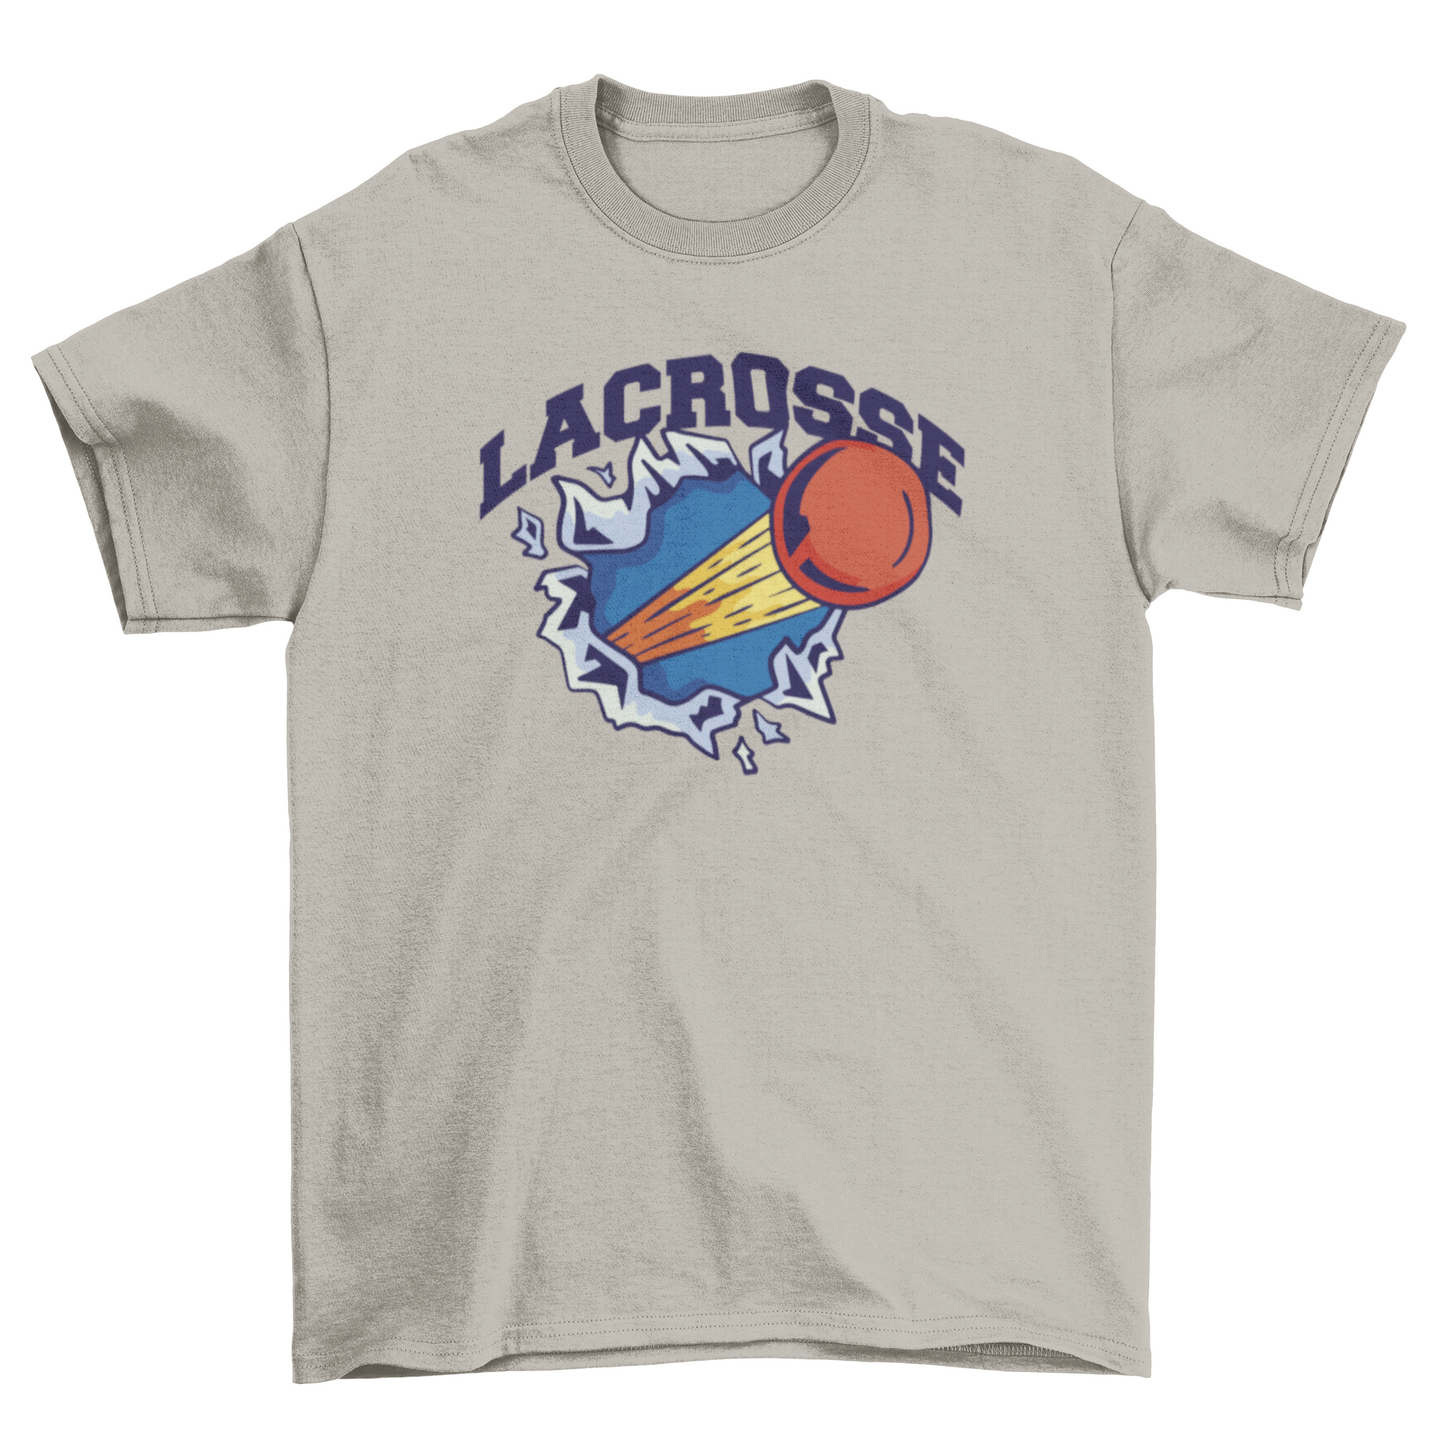 Lacrosse wild t-shirt